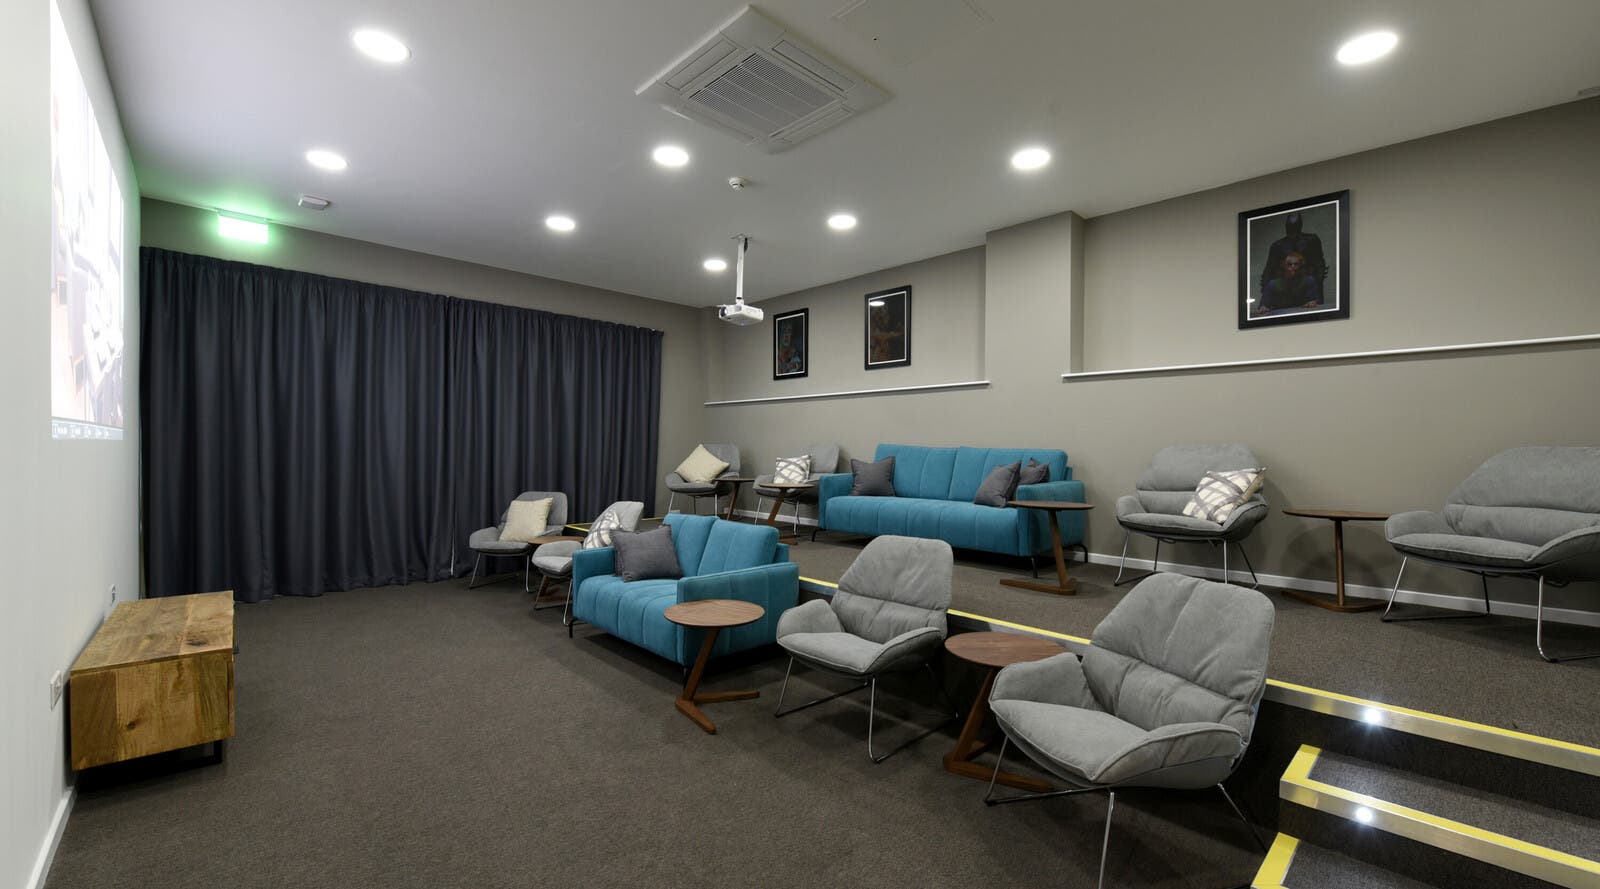 Strathclyde student accommodation cinema at St. Mungo's